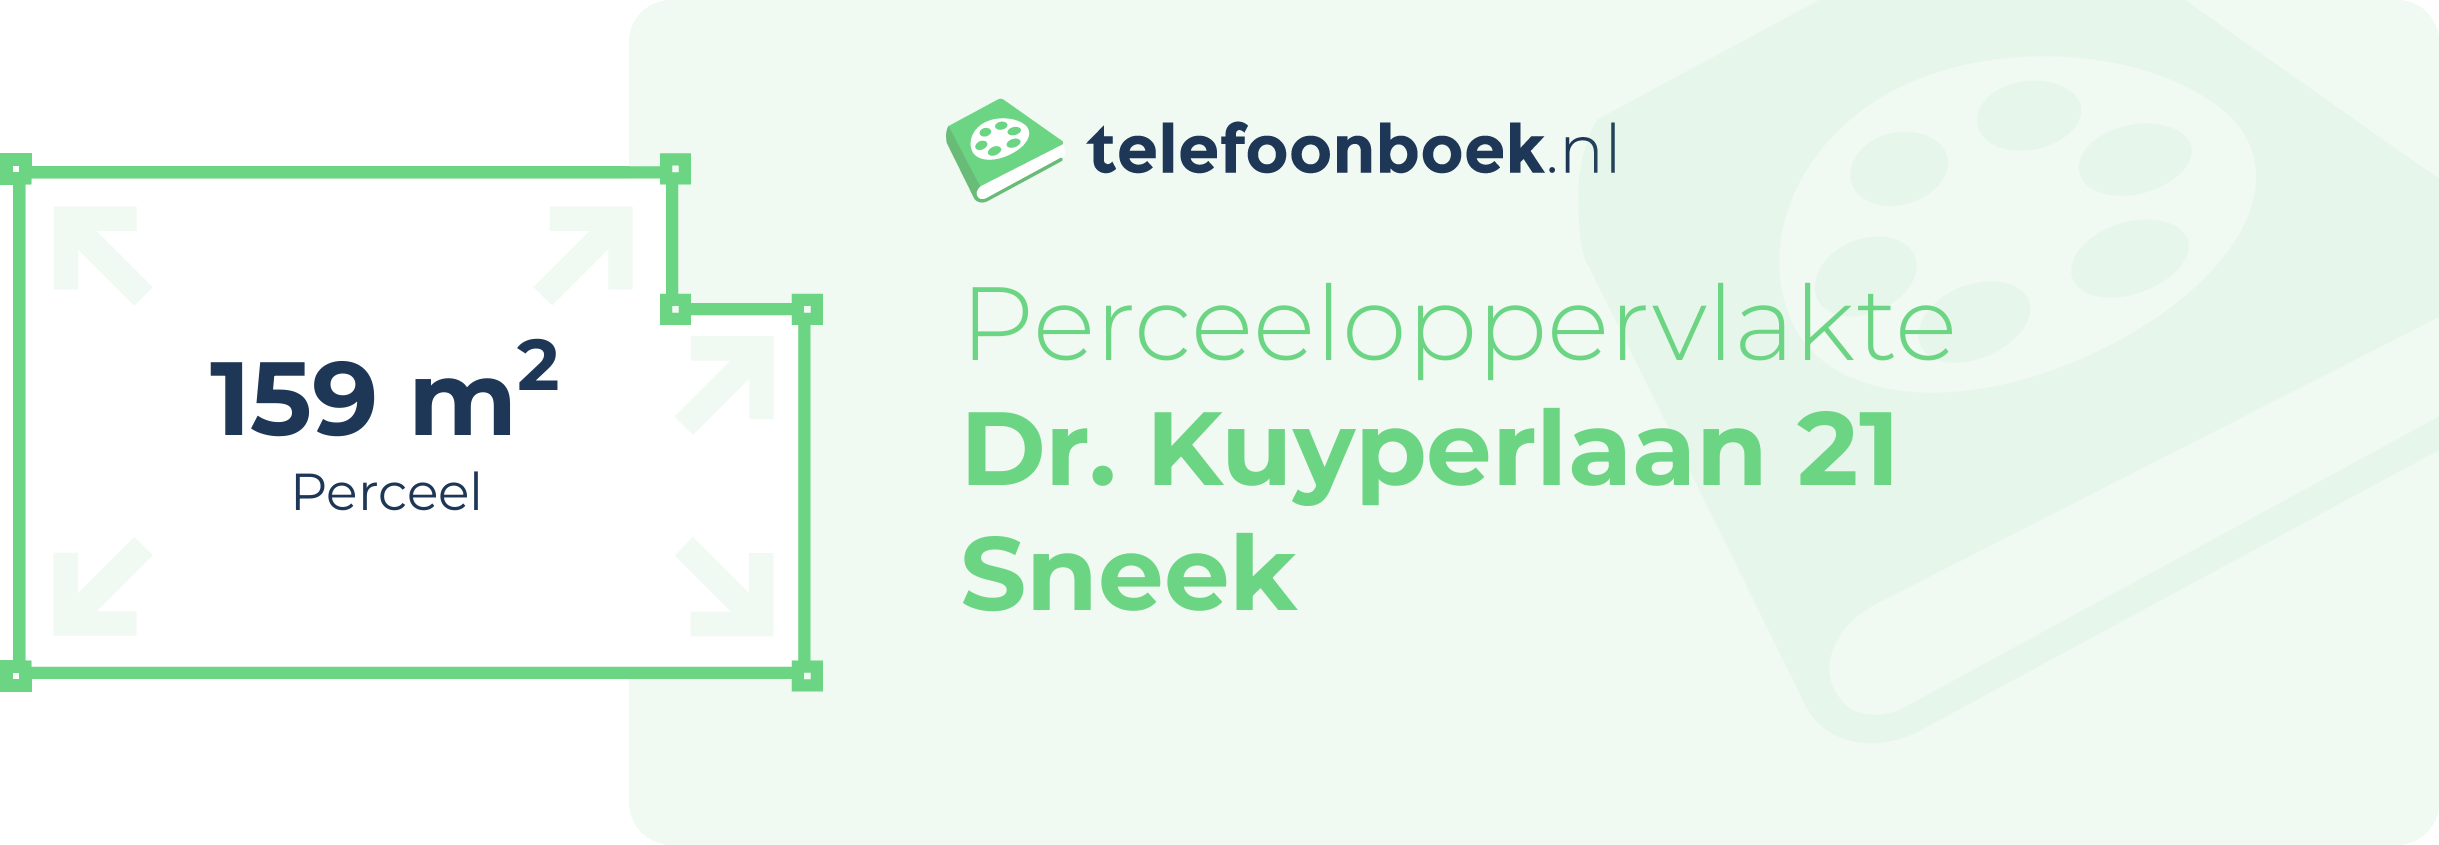 Perceeloppervlakte Dr. Kuyperlaan 21 Sneek